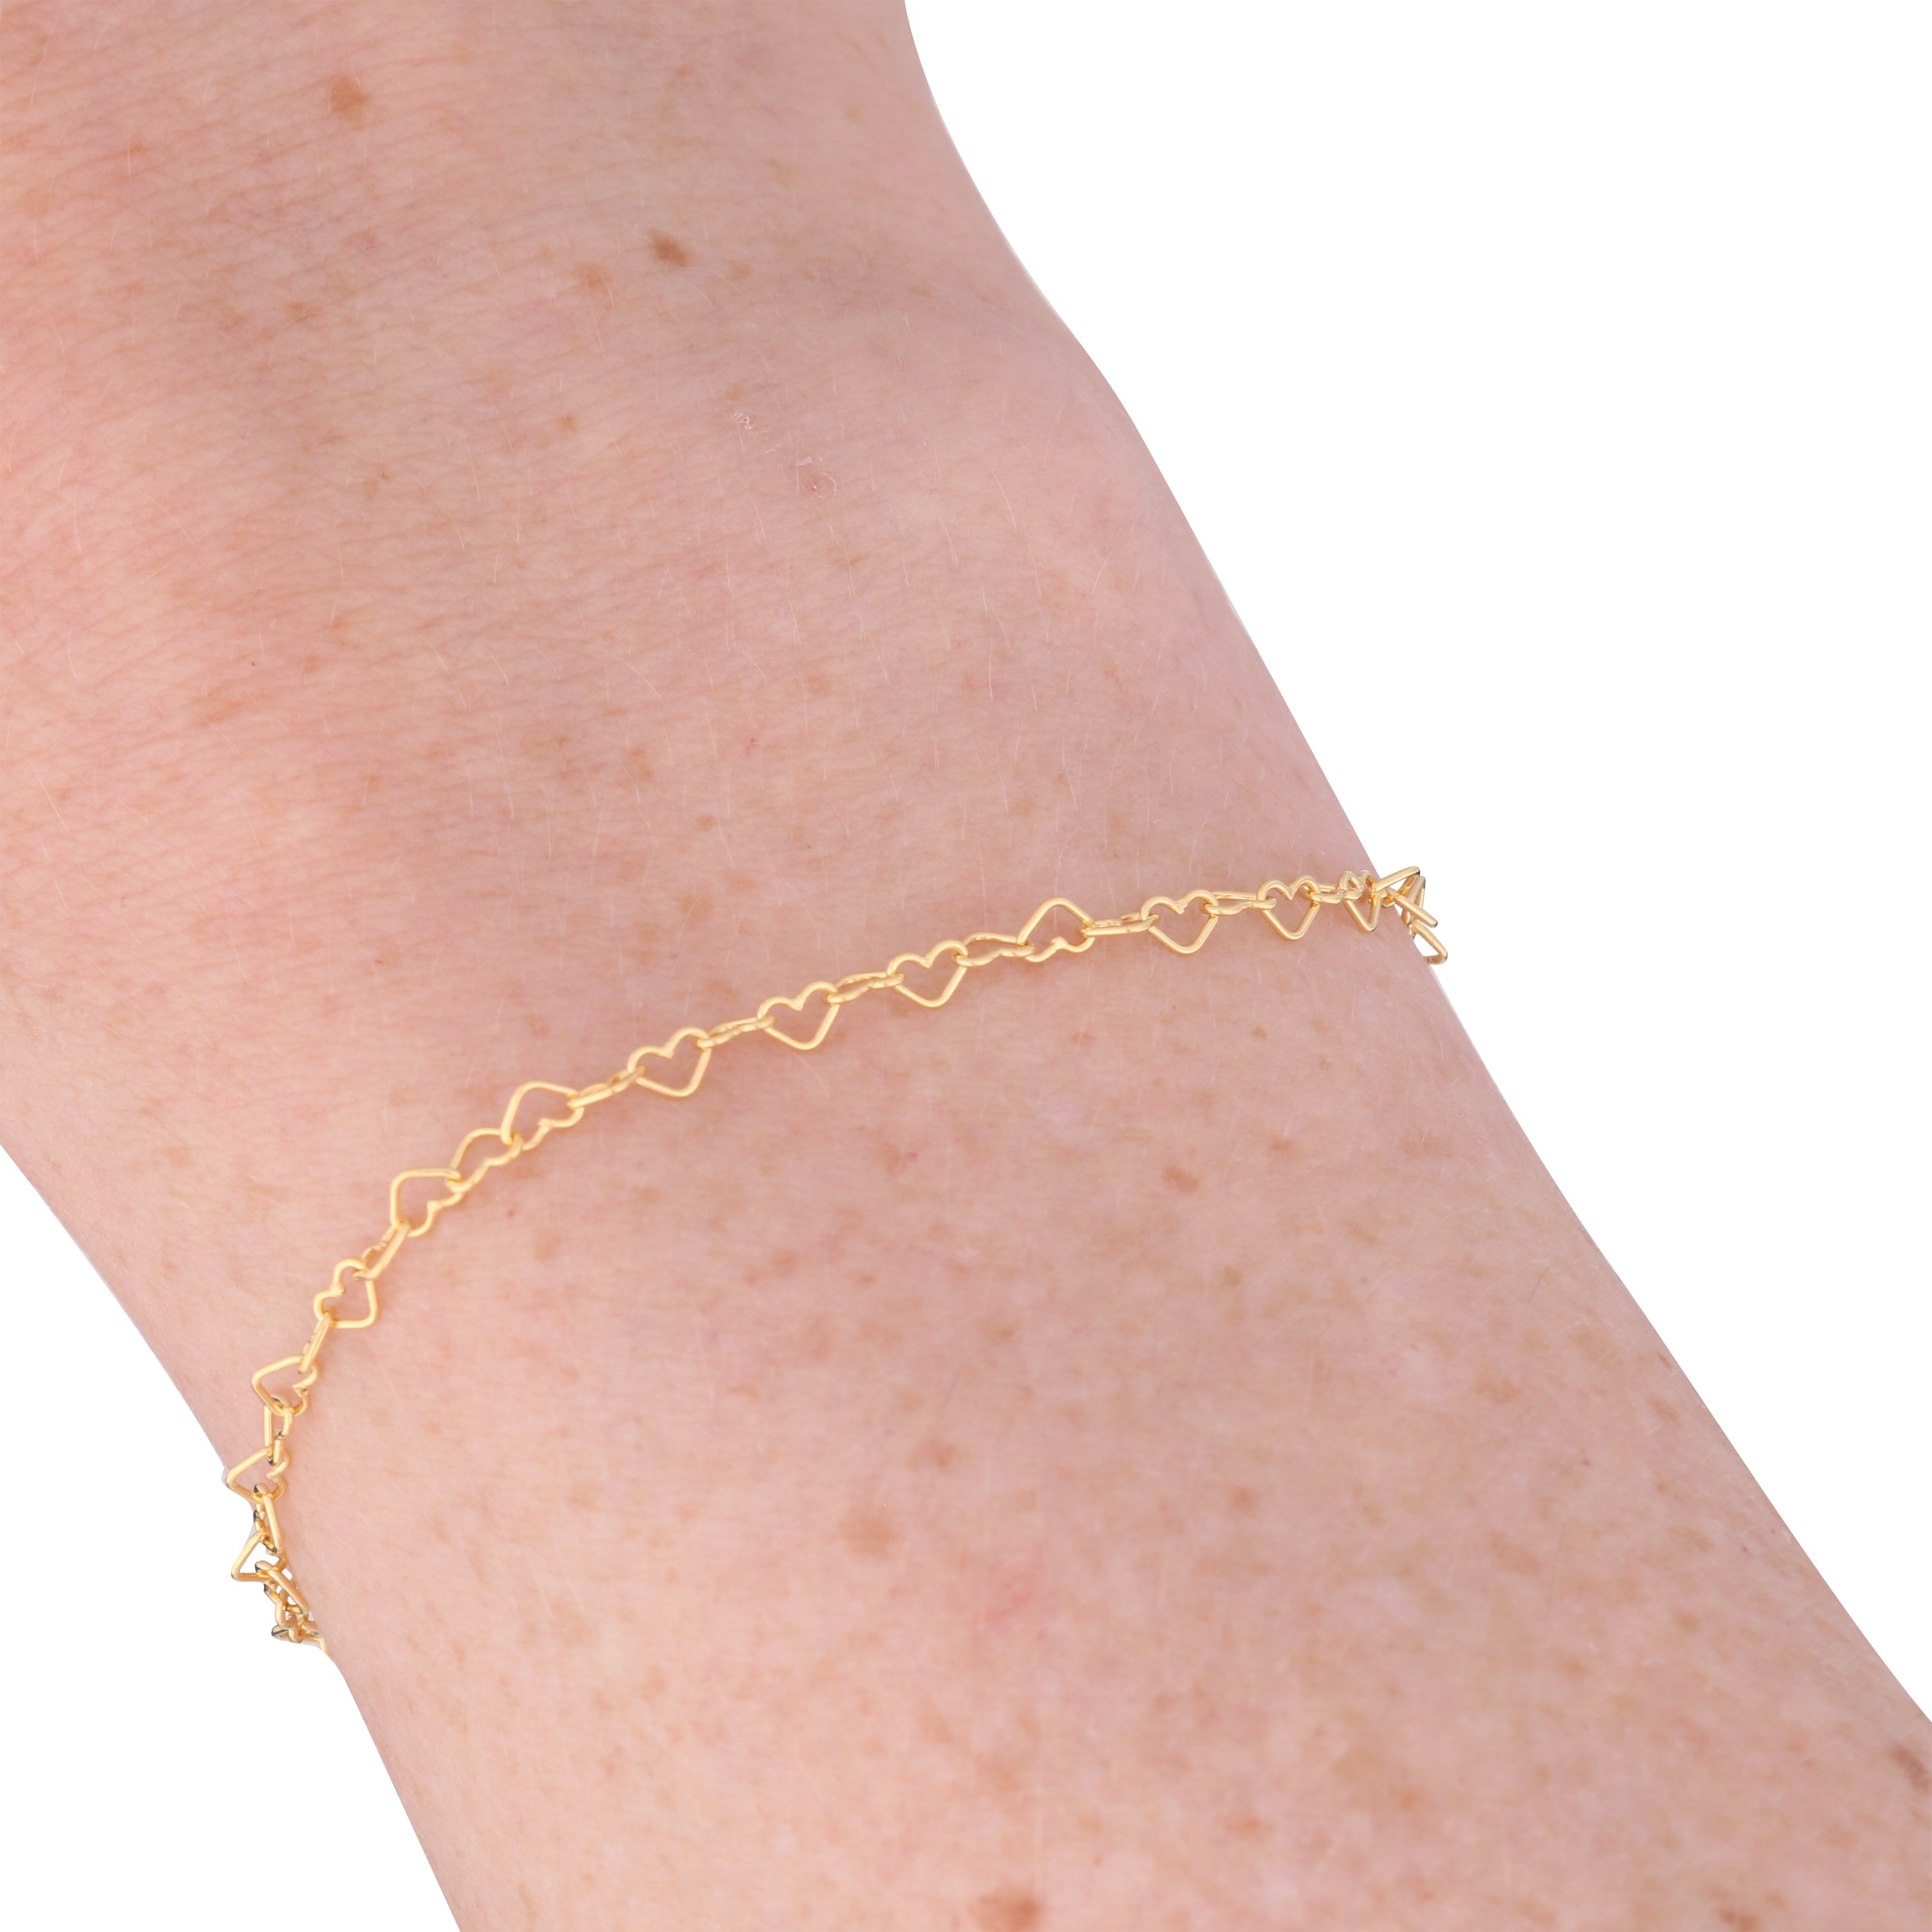 Medium copper chain bracelet or anklet 2.3mm